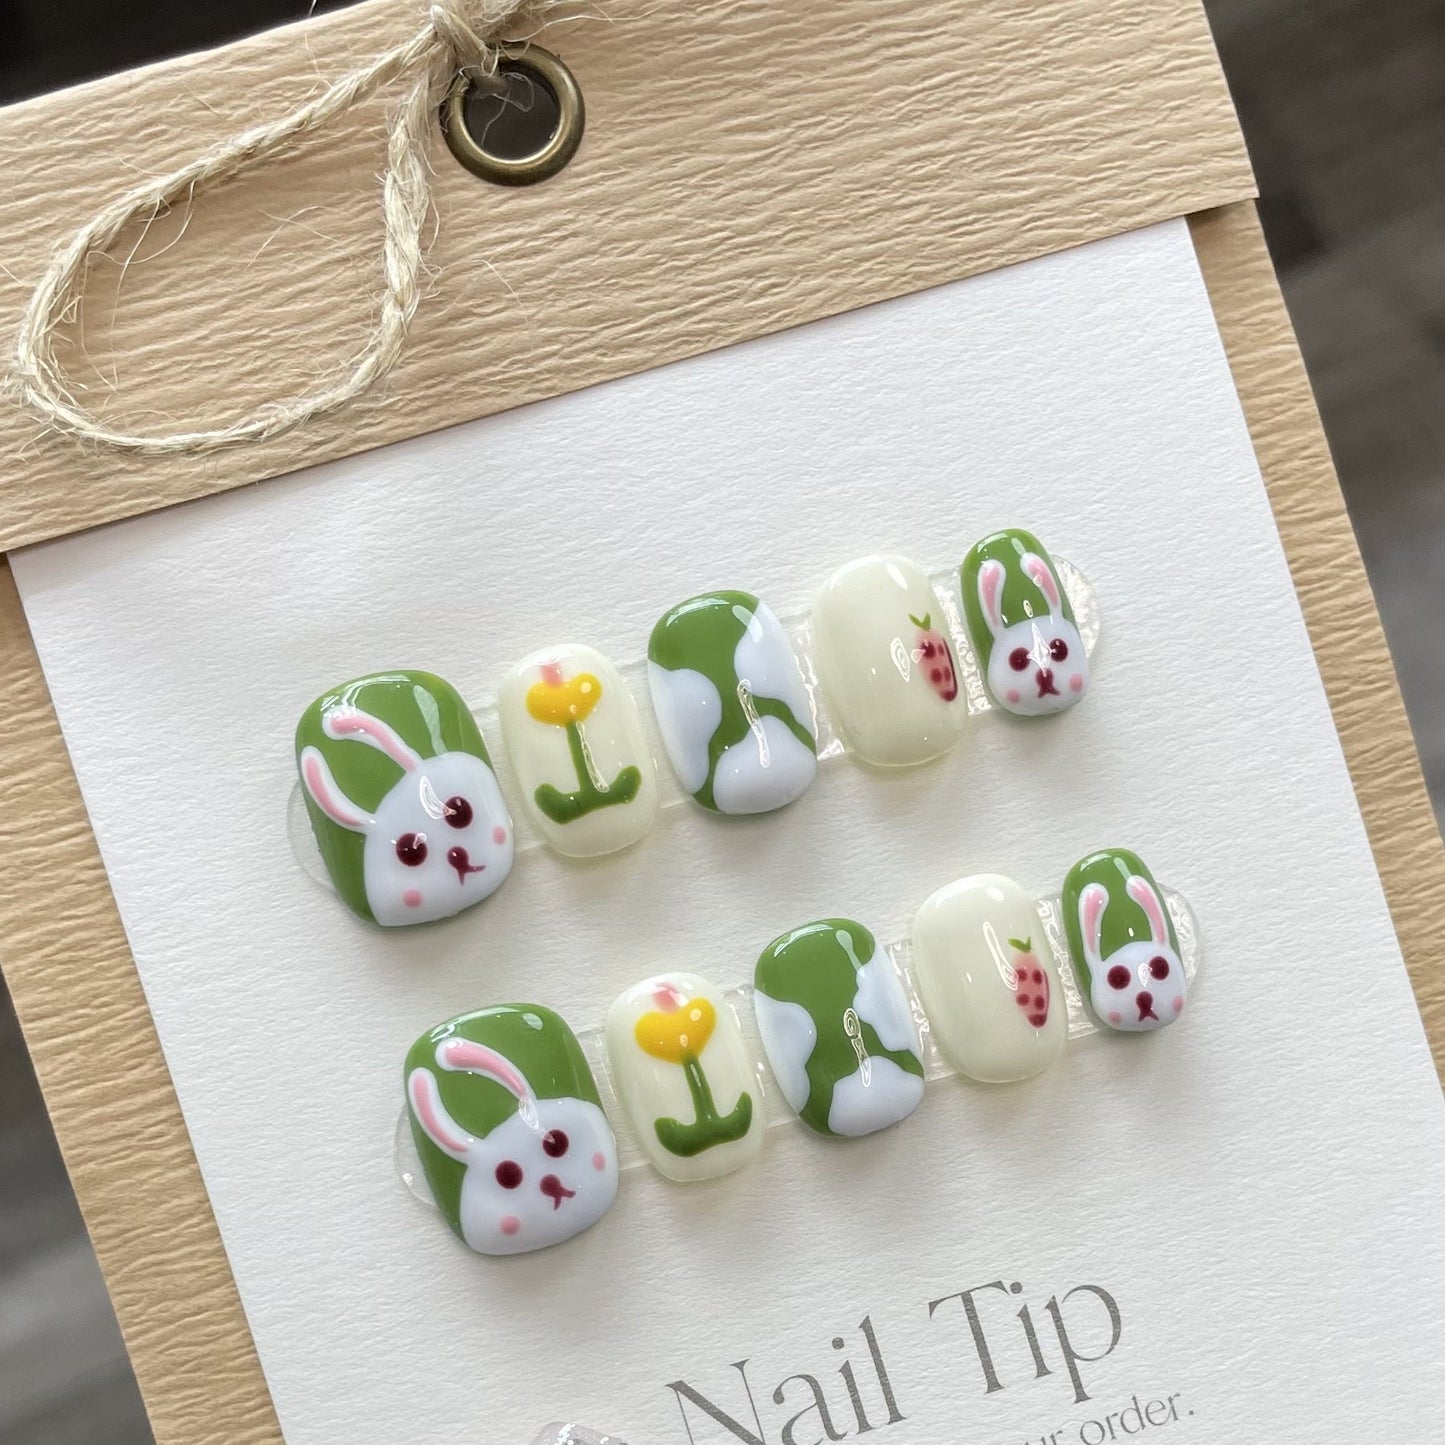 742 Cute Rabbit style press on nails 100% handmade false nails white green